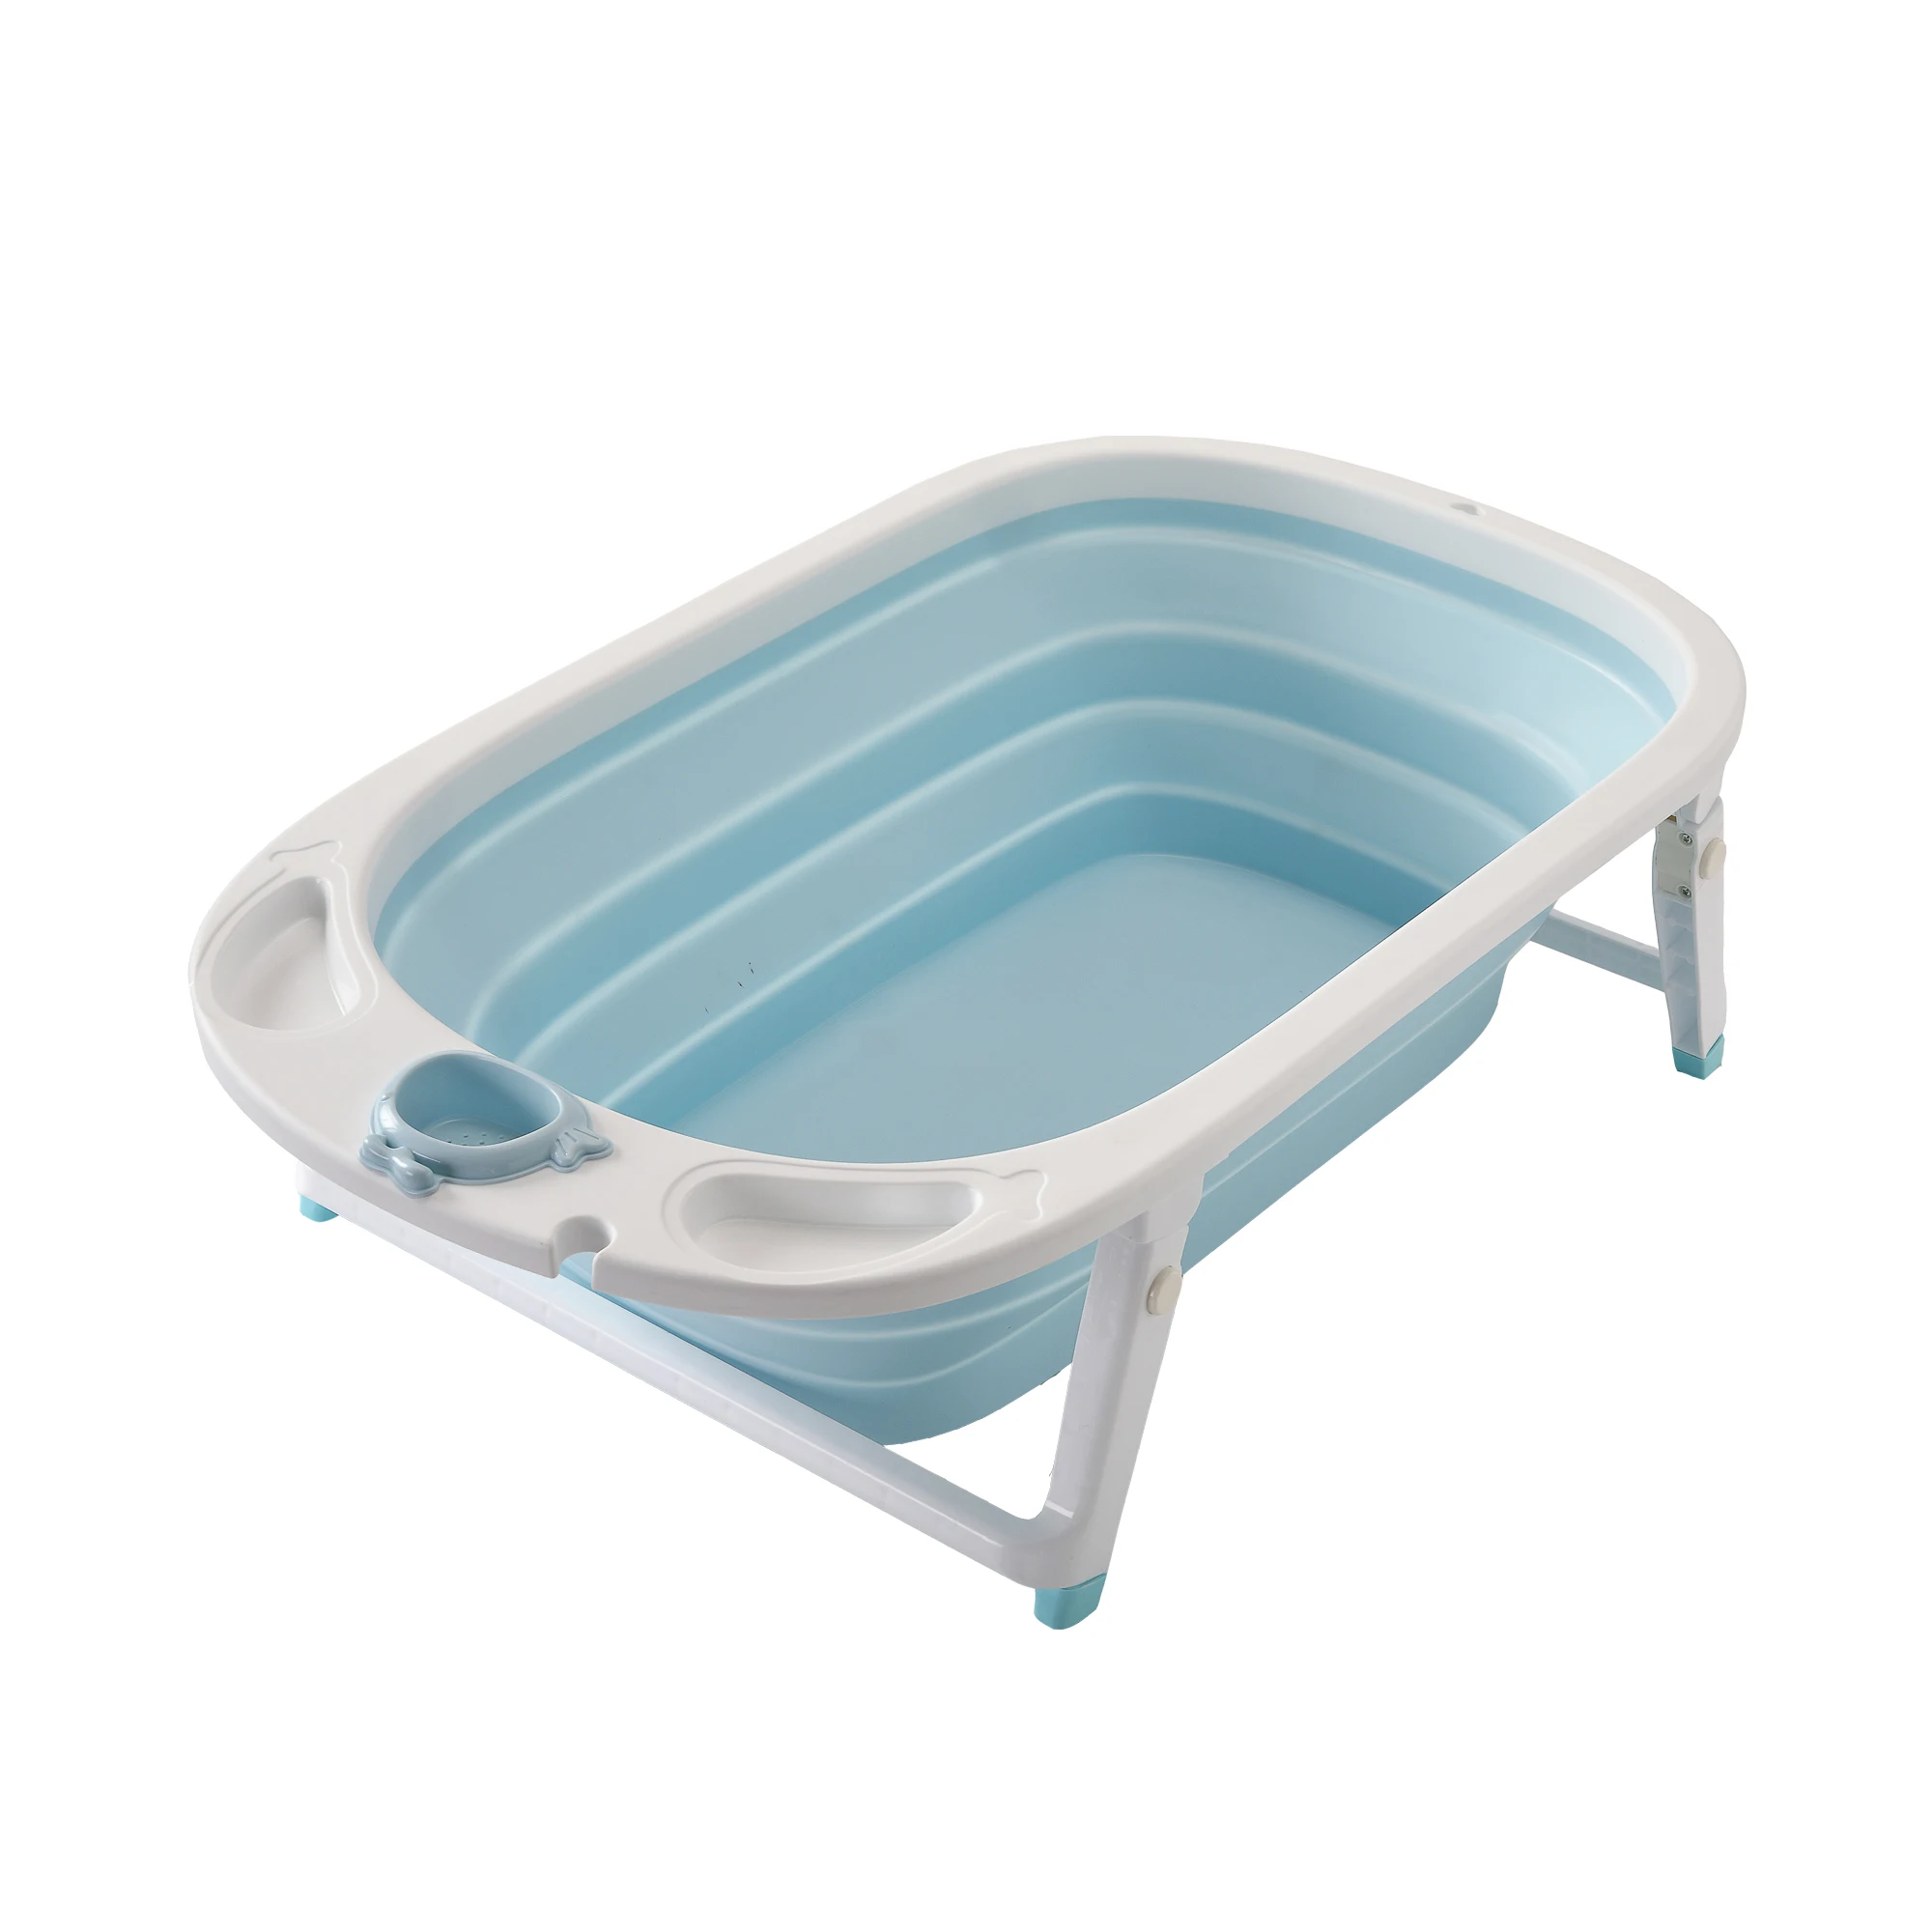 

New products plastic New style foldable baby bathtub/good folding baby bath tub with portable fold bathtub, Blue/green/pink